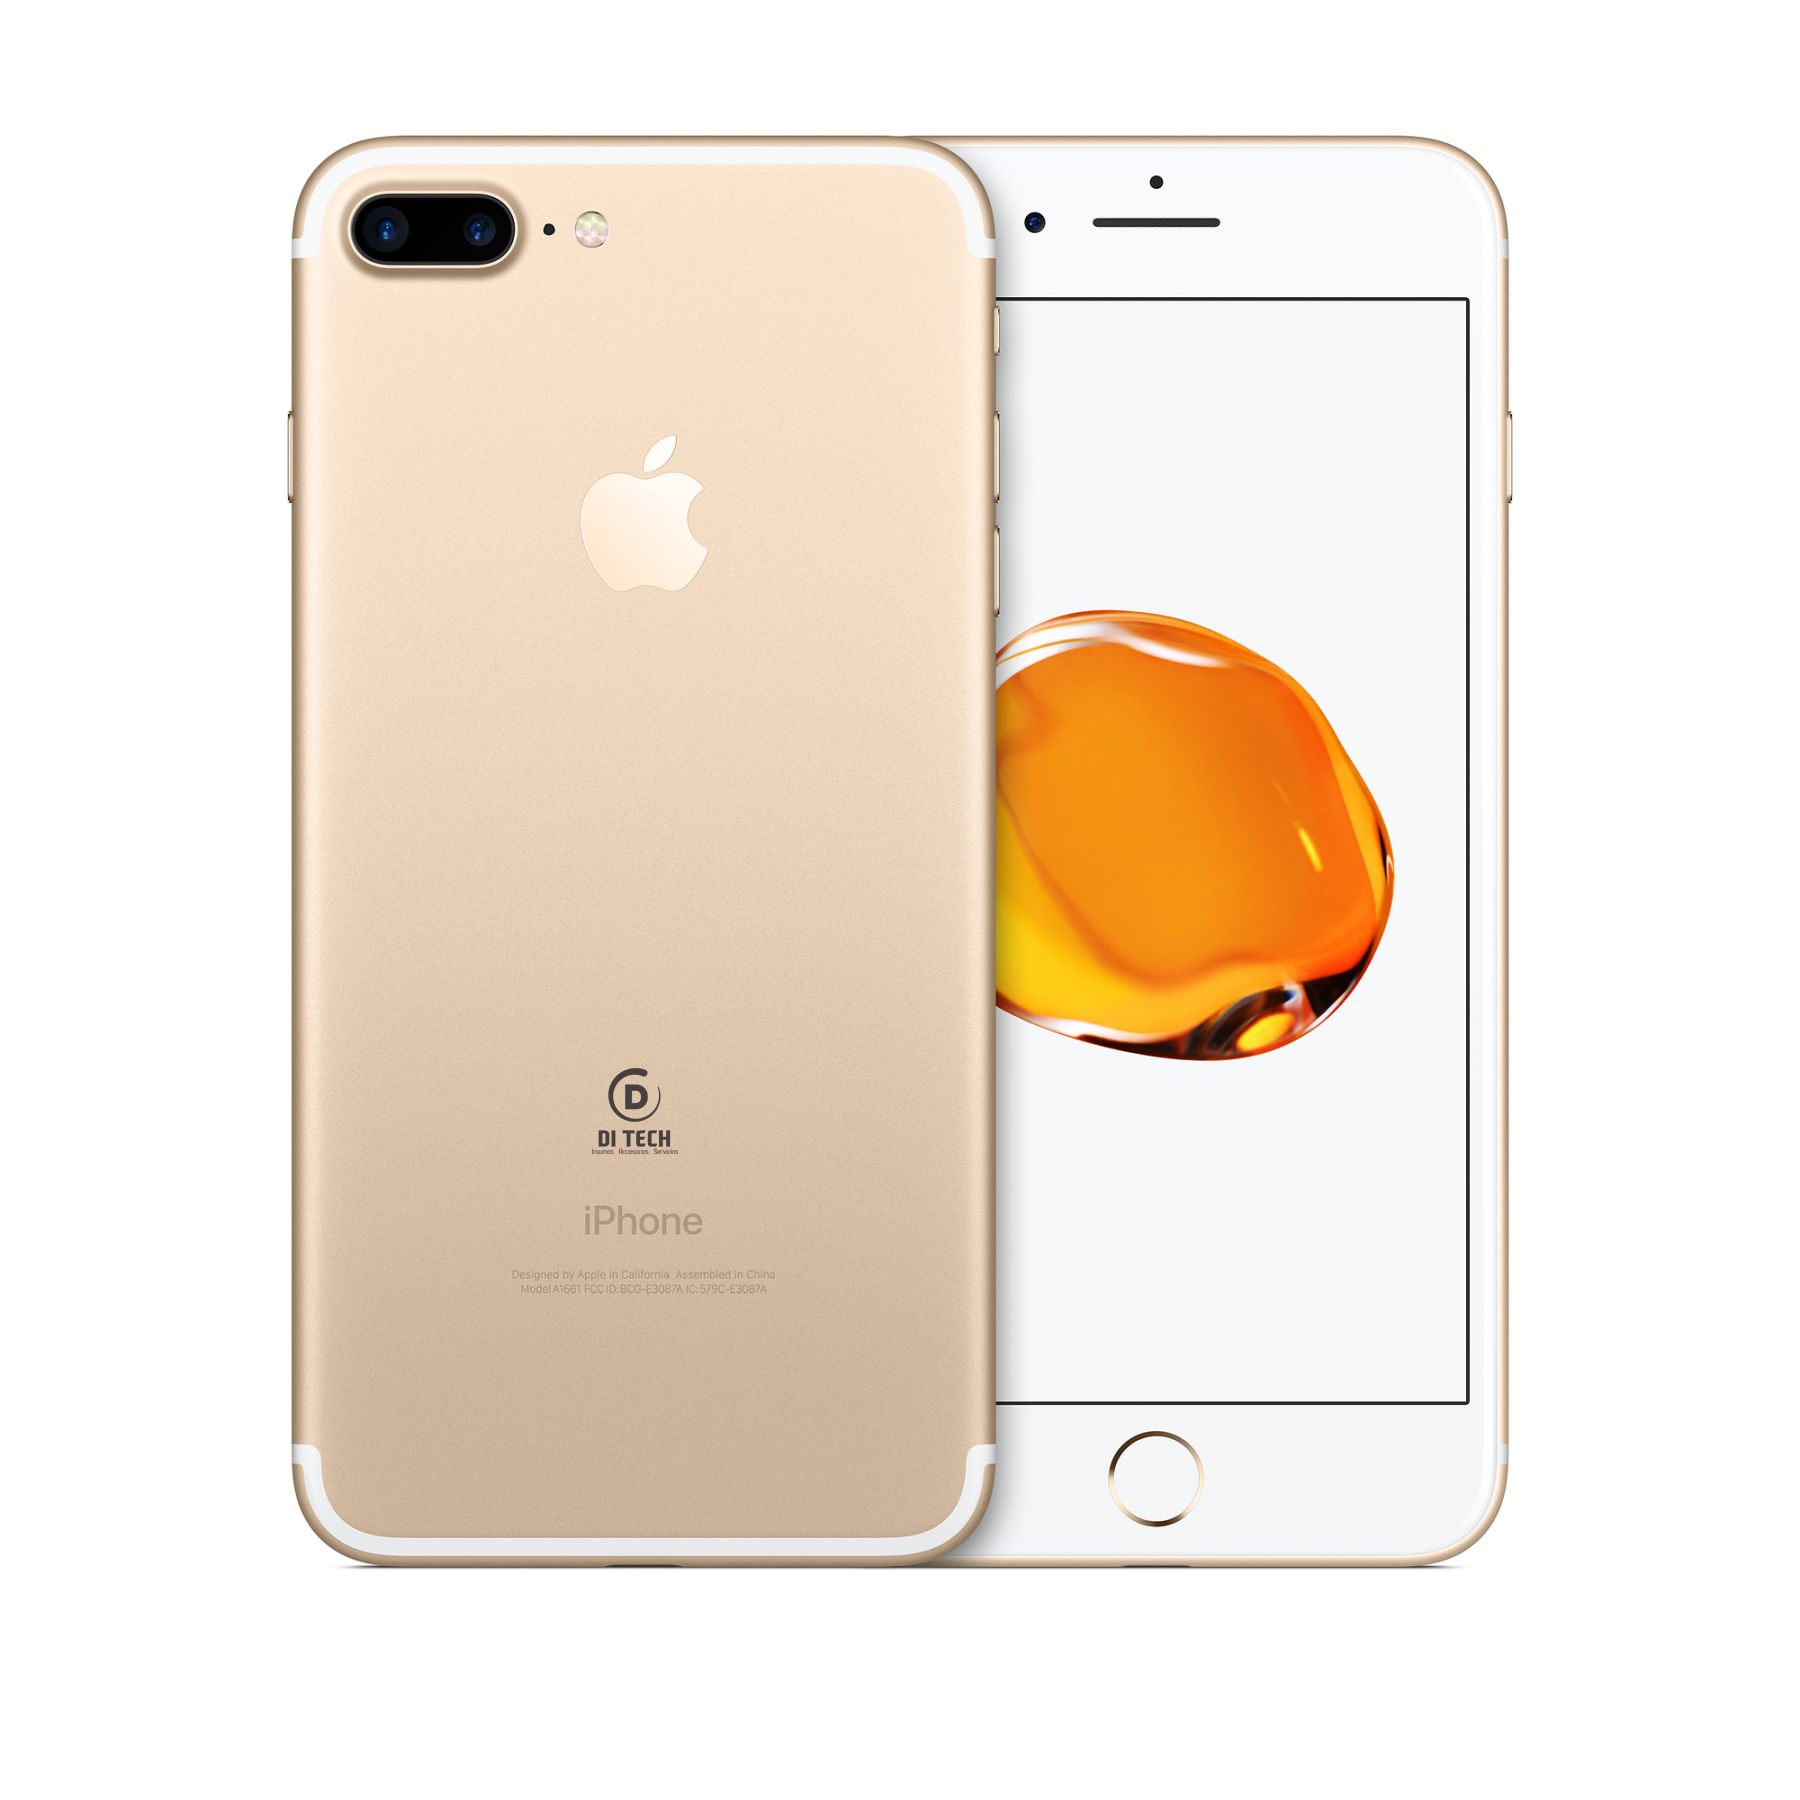 Compre Celular Apple iPhone 7 Plus LL/A1784 | 3/32GB | Di Tech  Paraguay